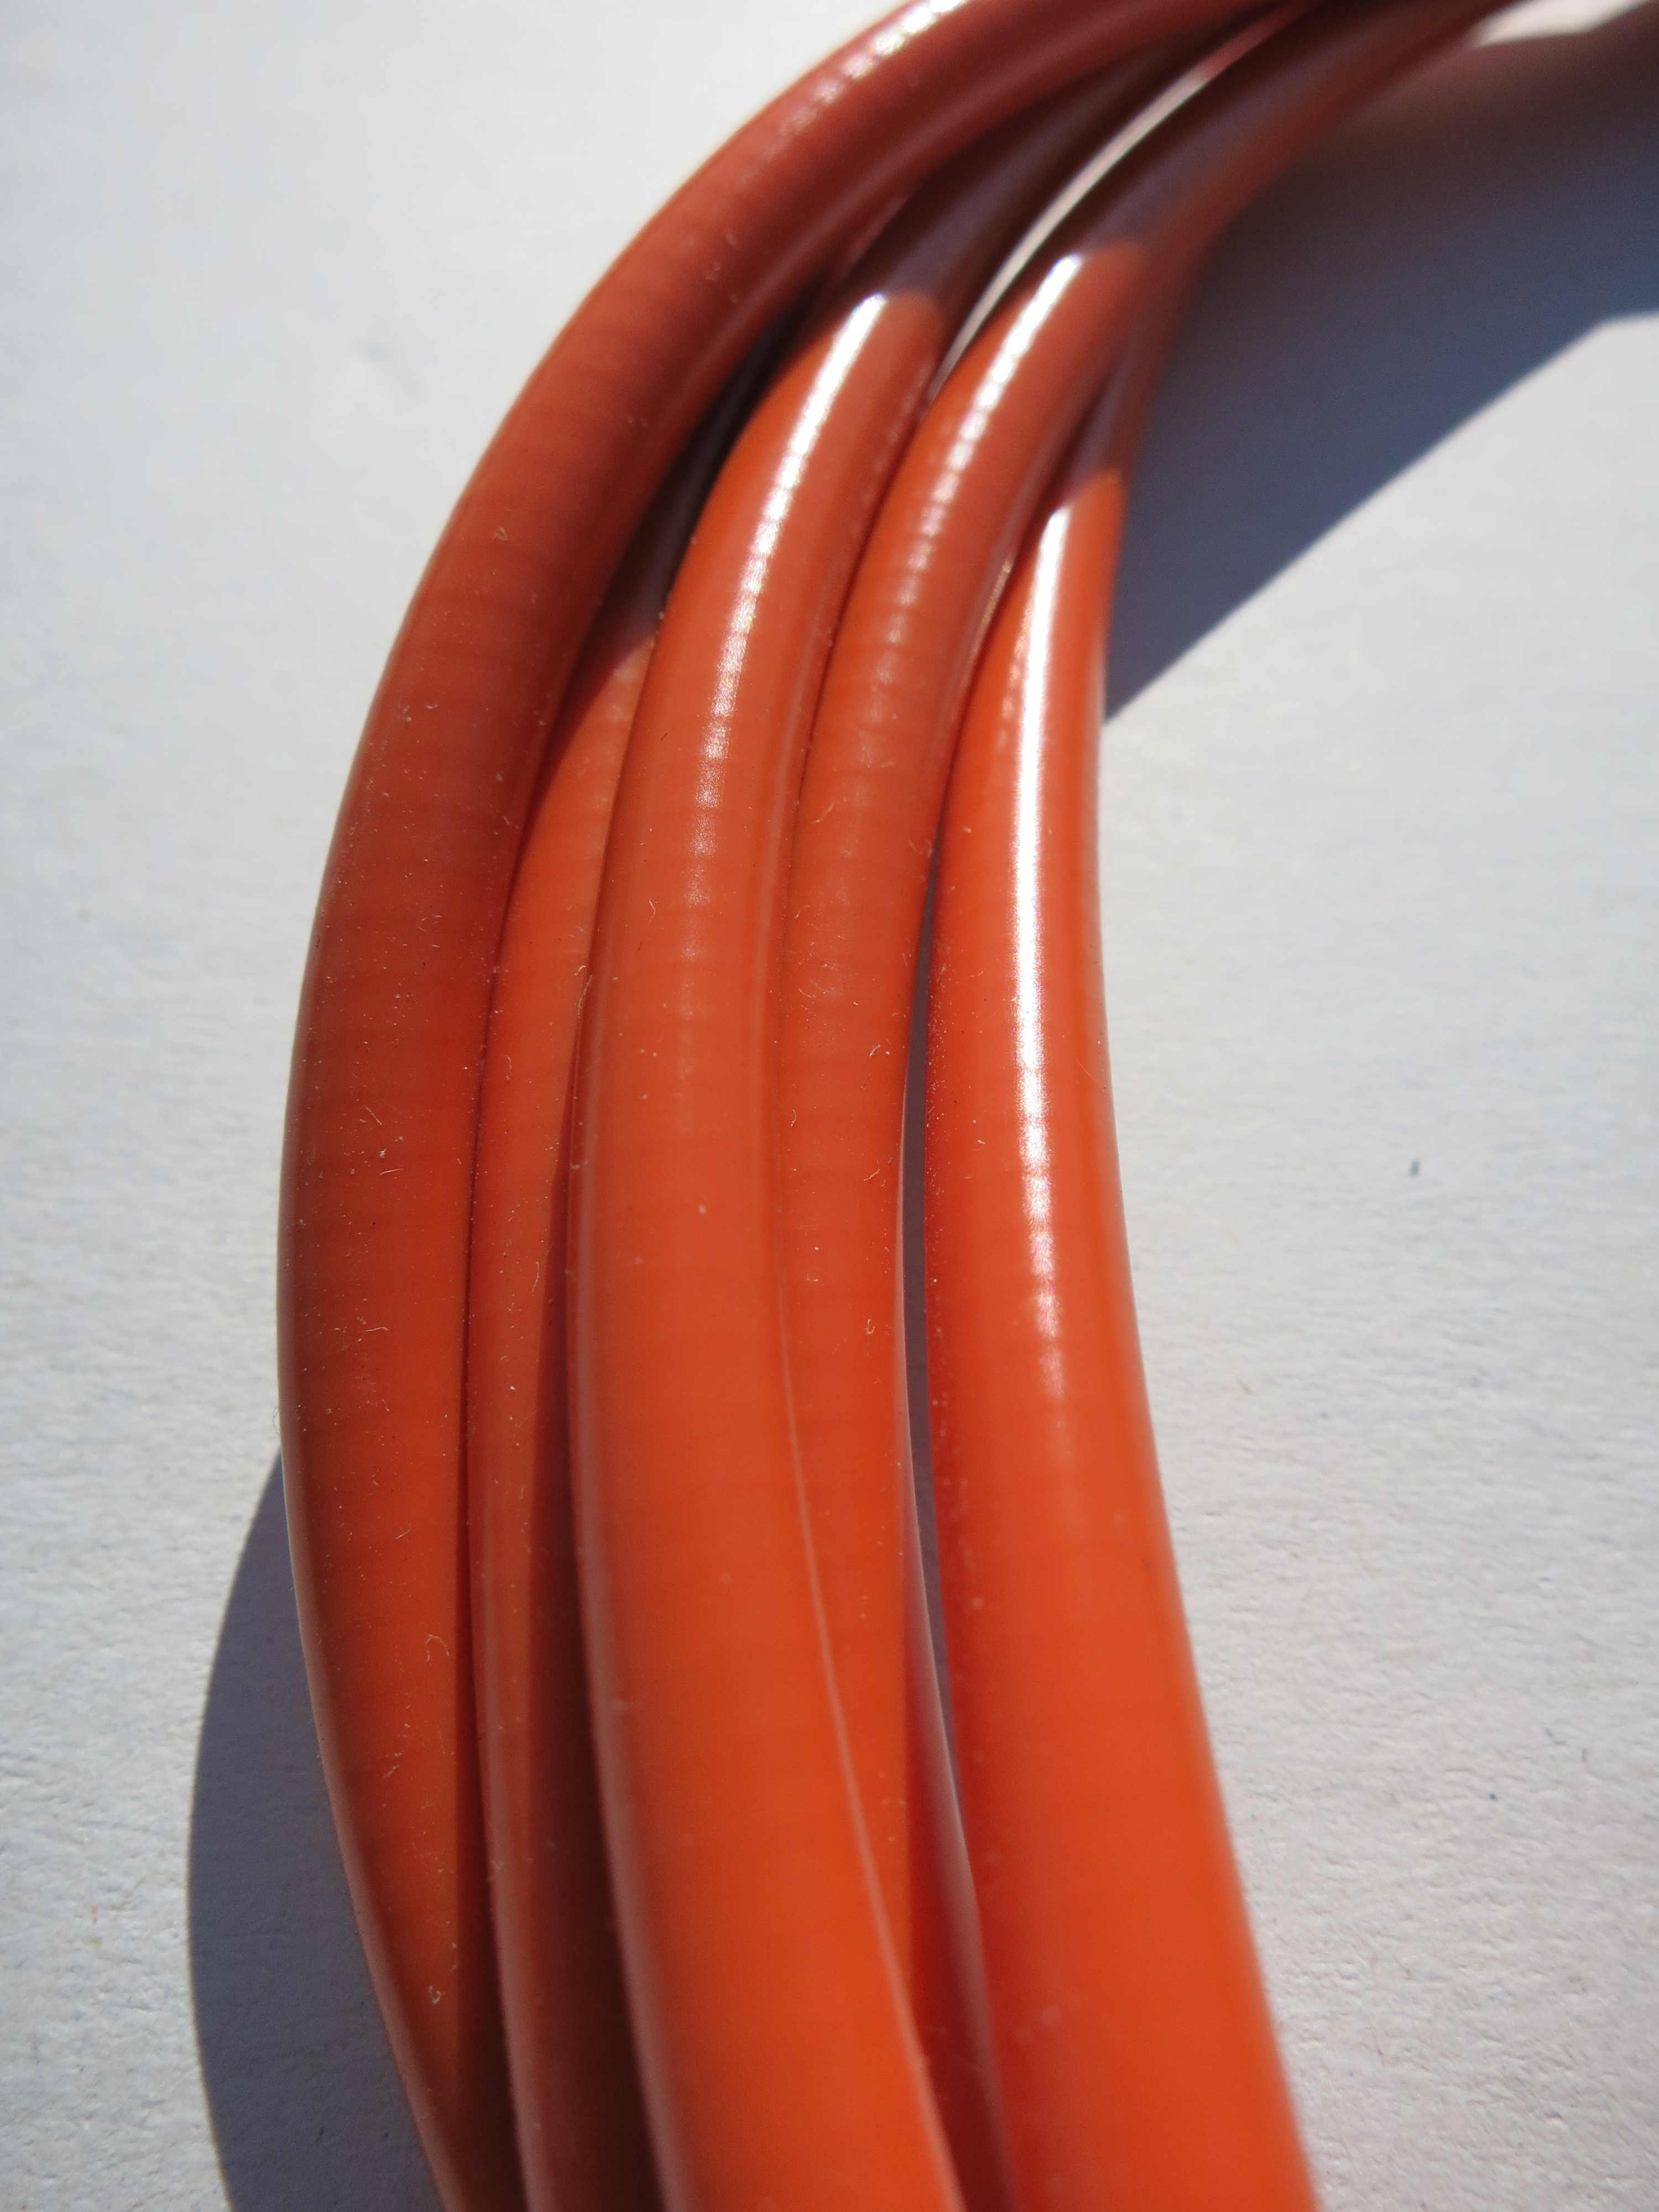 Cable exterior Bowden en naranja